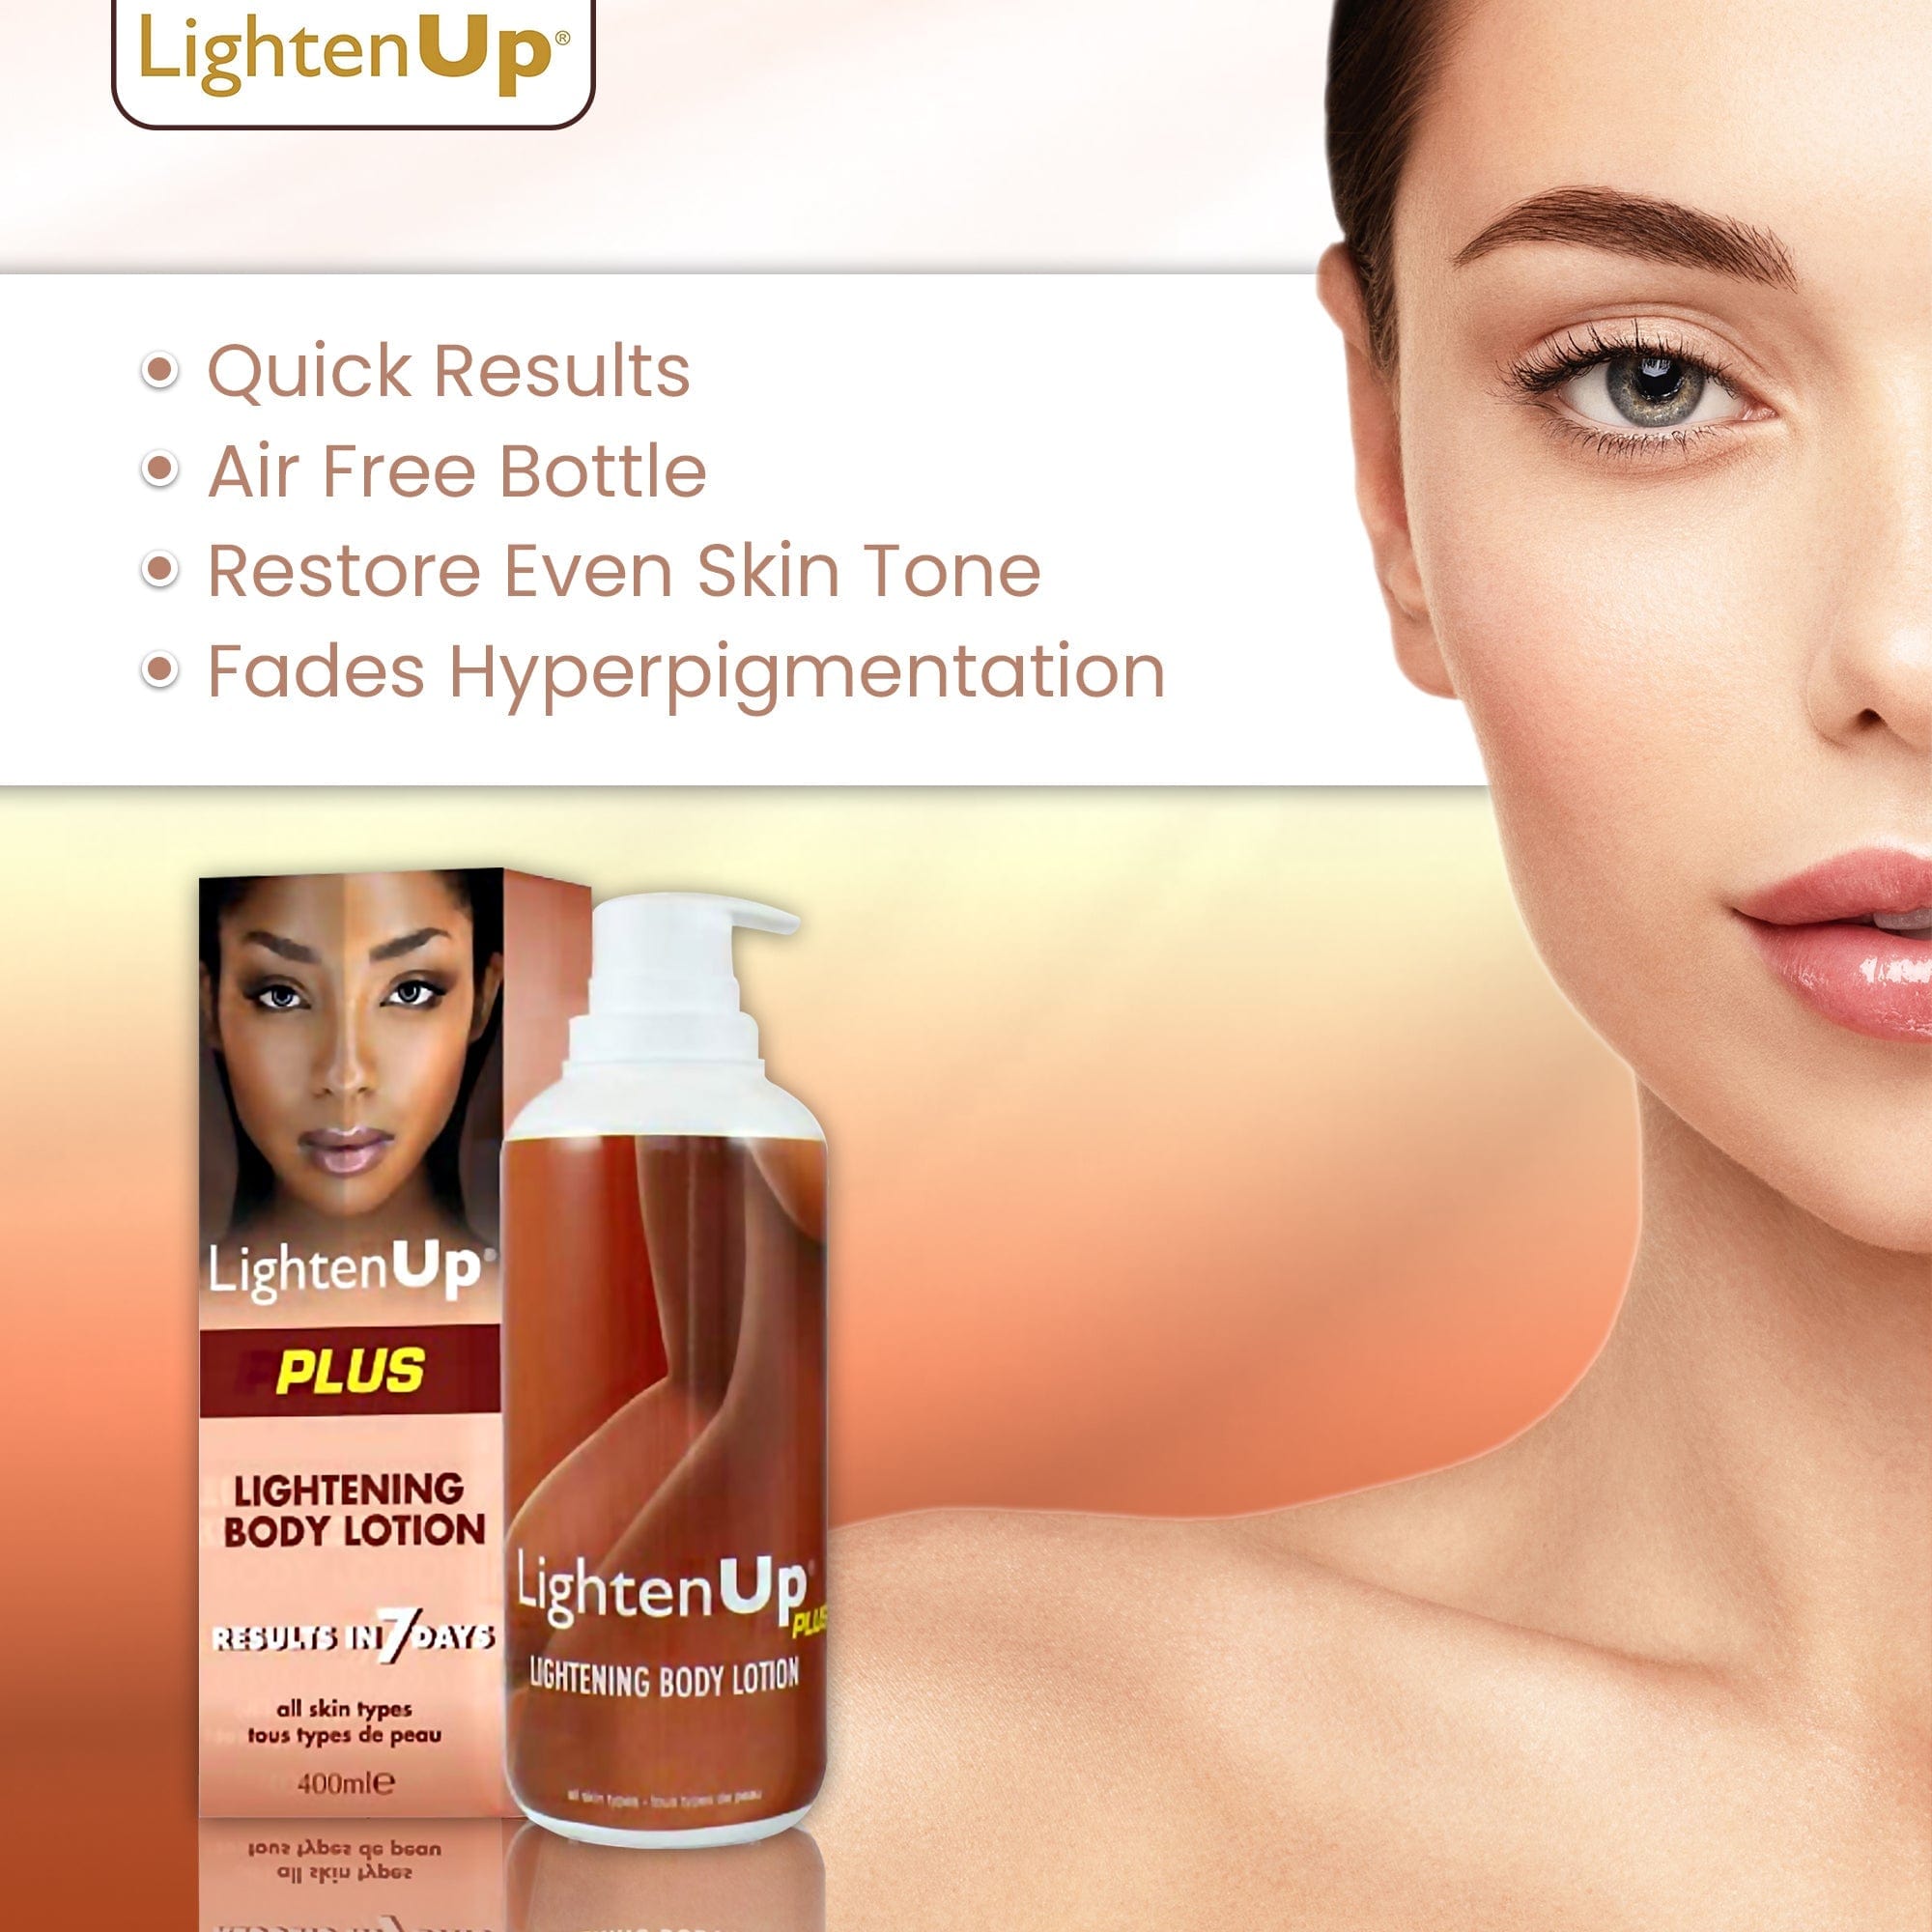 Omic LightenUp PLUS Lightening Body Lotion - 400ml LightenUp - Mitchell Brands - Hautaufhellung, Hautaufhellung, Verblassen dunkler Flecken, Shea Butter, Haarwuchsmittel